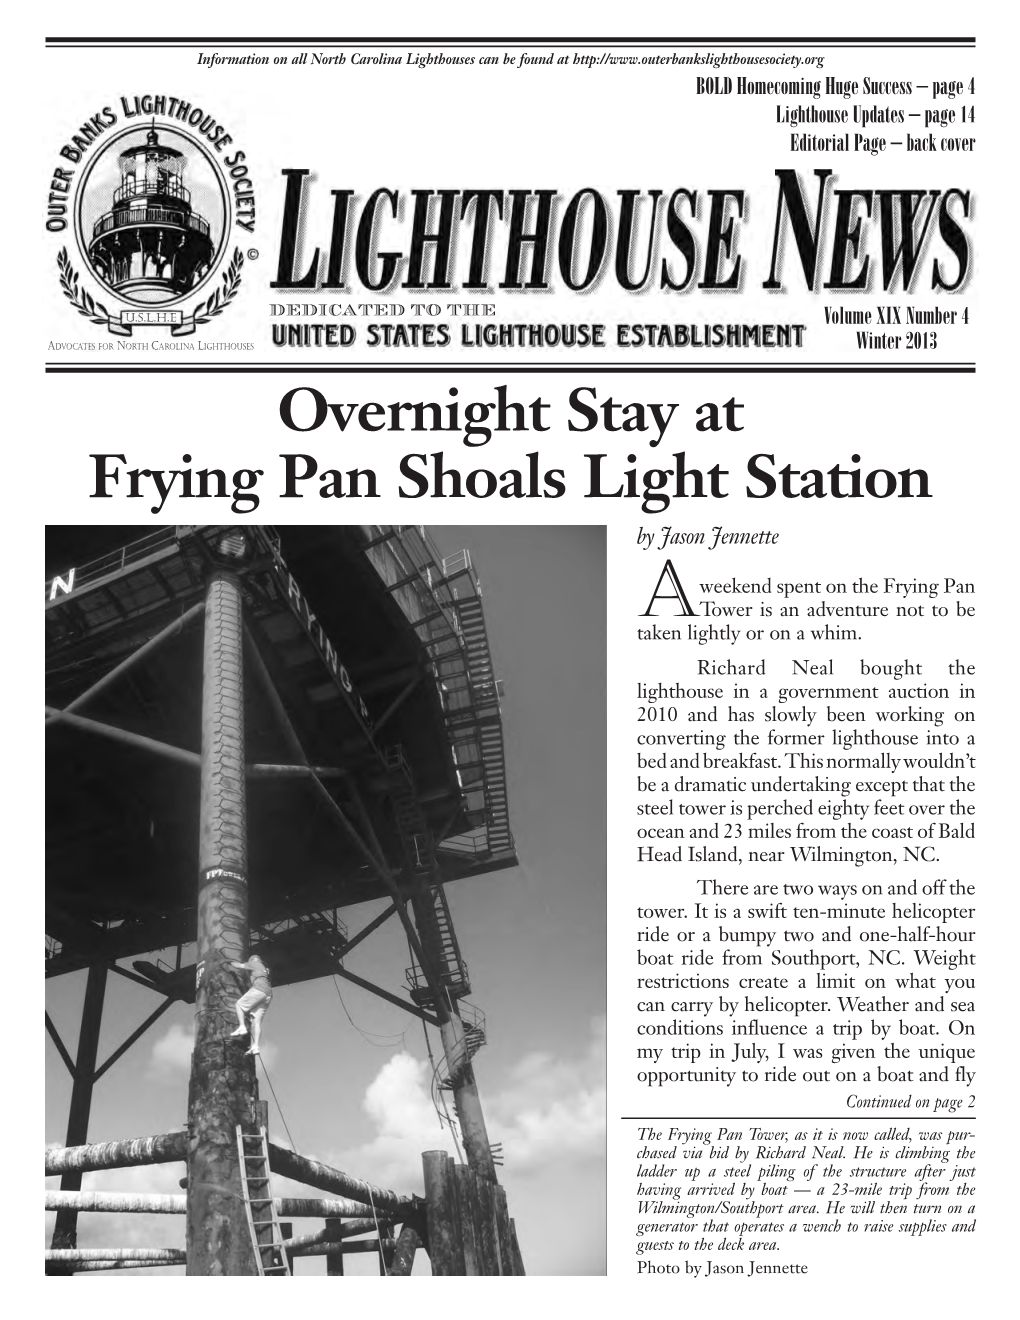 Overnight Stay at Frying Pan Shoals Light Station by Jason Jennette